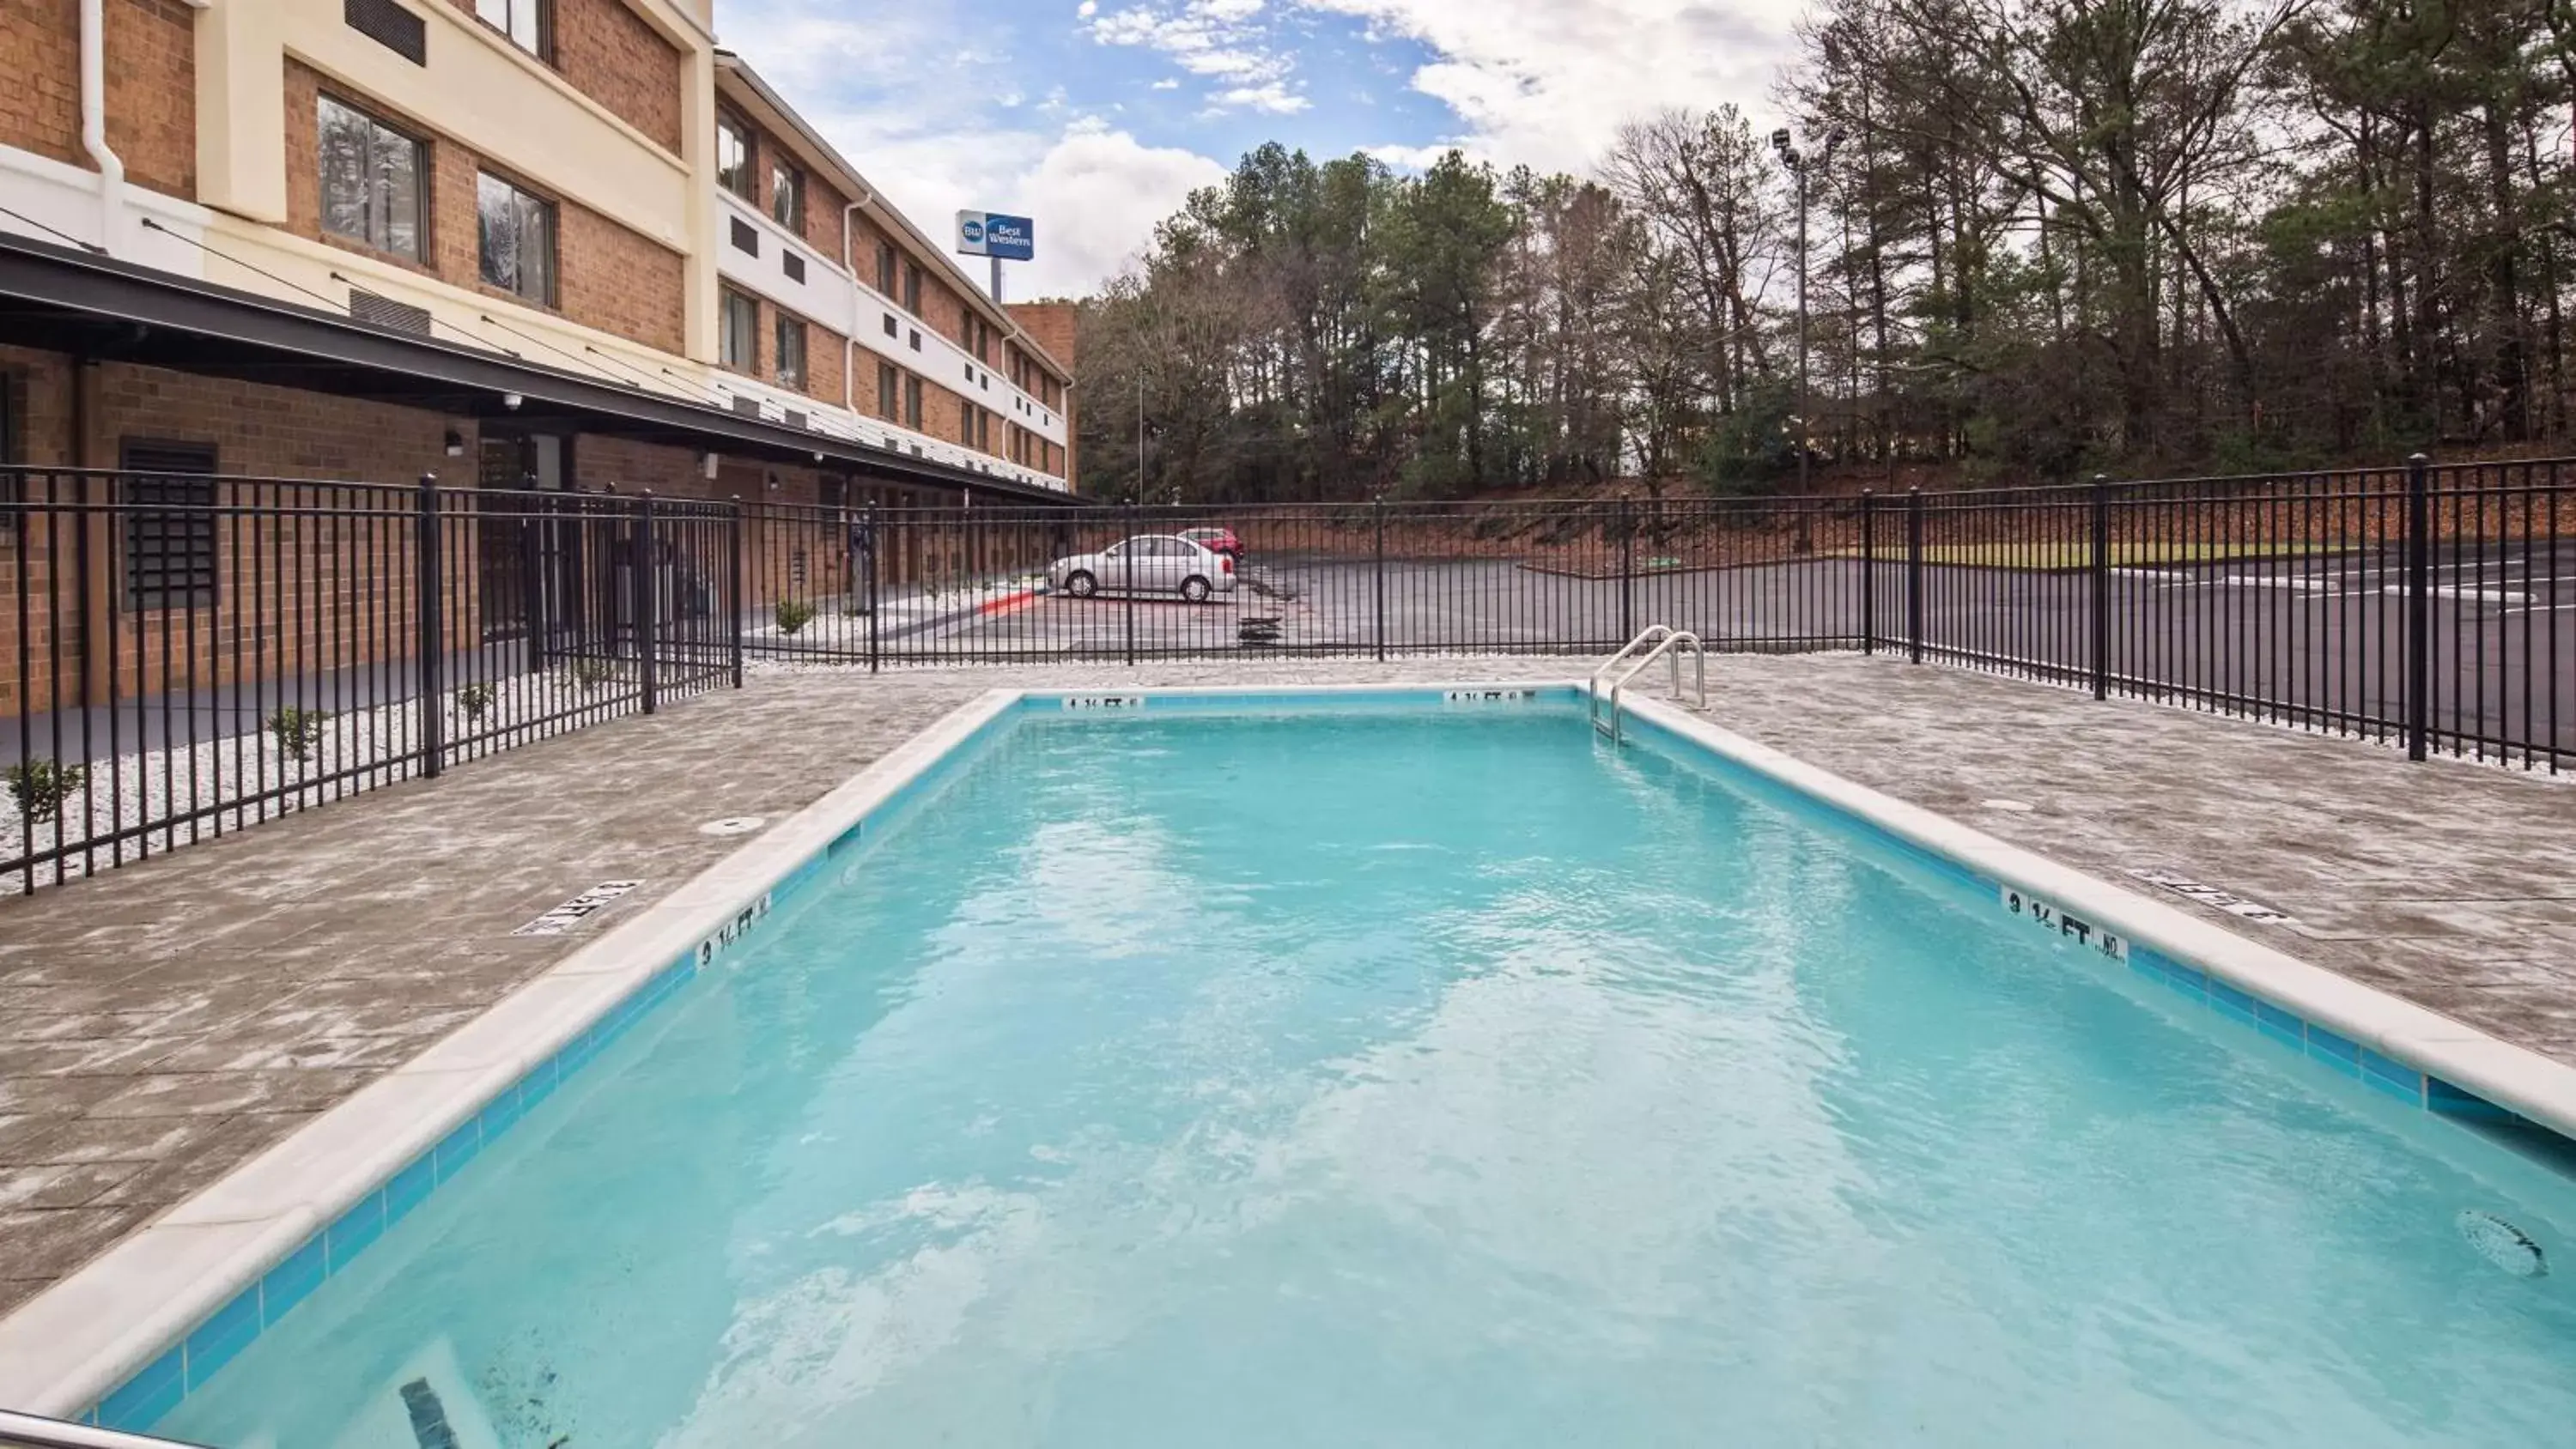 On site, Swimming Pool in Best Western Atlanta-Marietta Ballpark Hotel